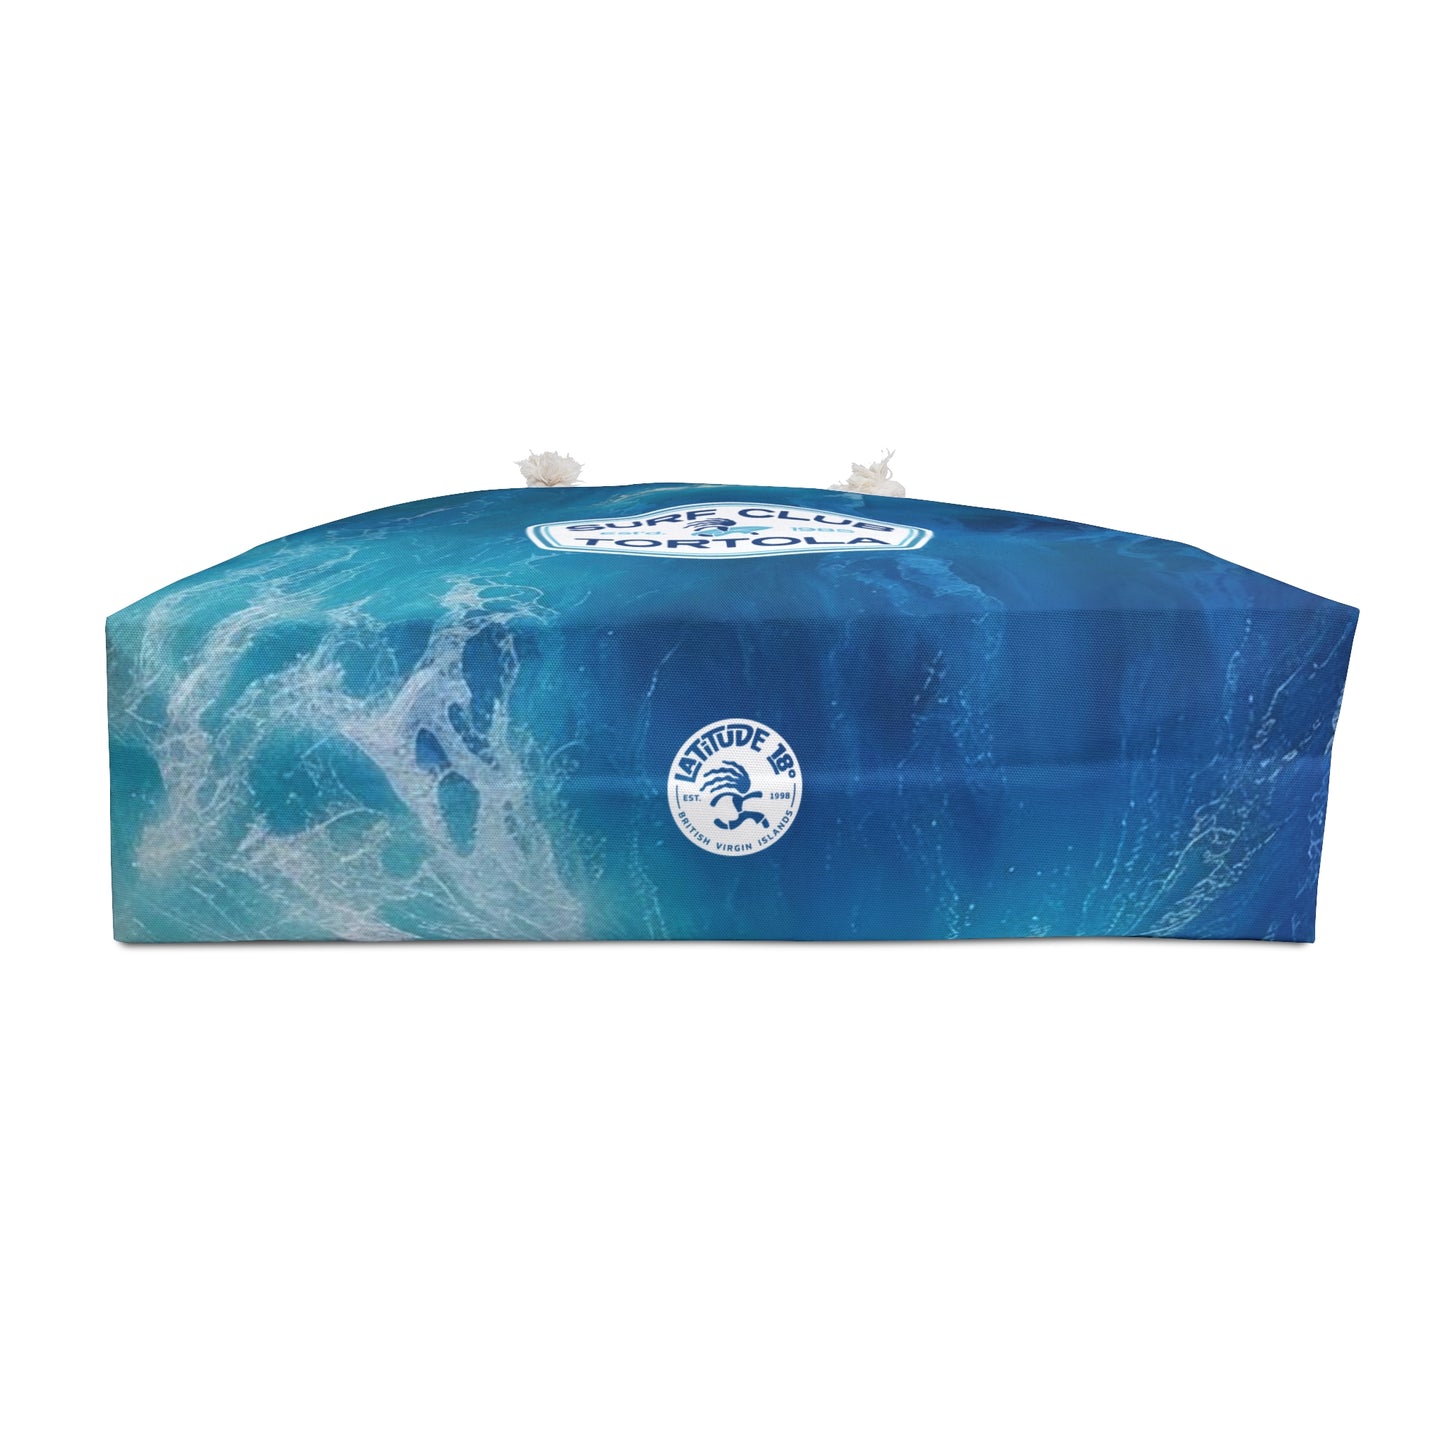 "Surf Club Tortola" Beach Bag